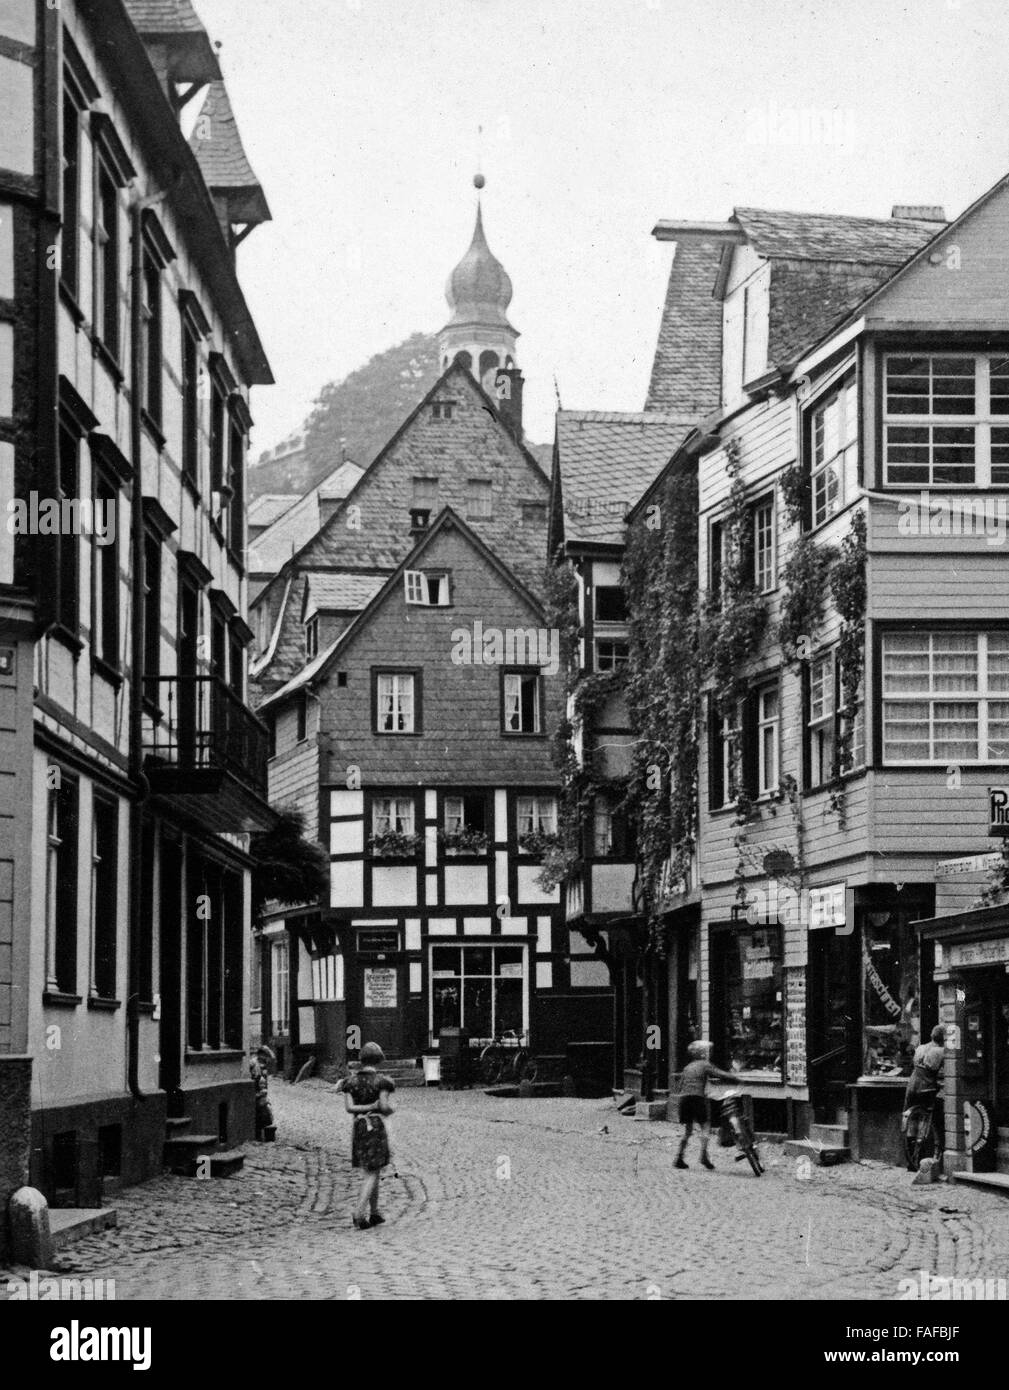 Blick in die Stadt Monschau an der Rur in der Eifel, Deutschland 1930 er Jahre. Vue de la ville de Monschau à fleuve Rur, dans l'Eifel, Allemagne 1930. Banque D'Images